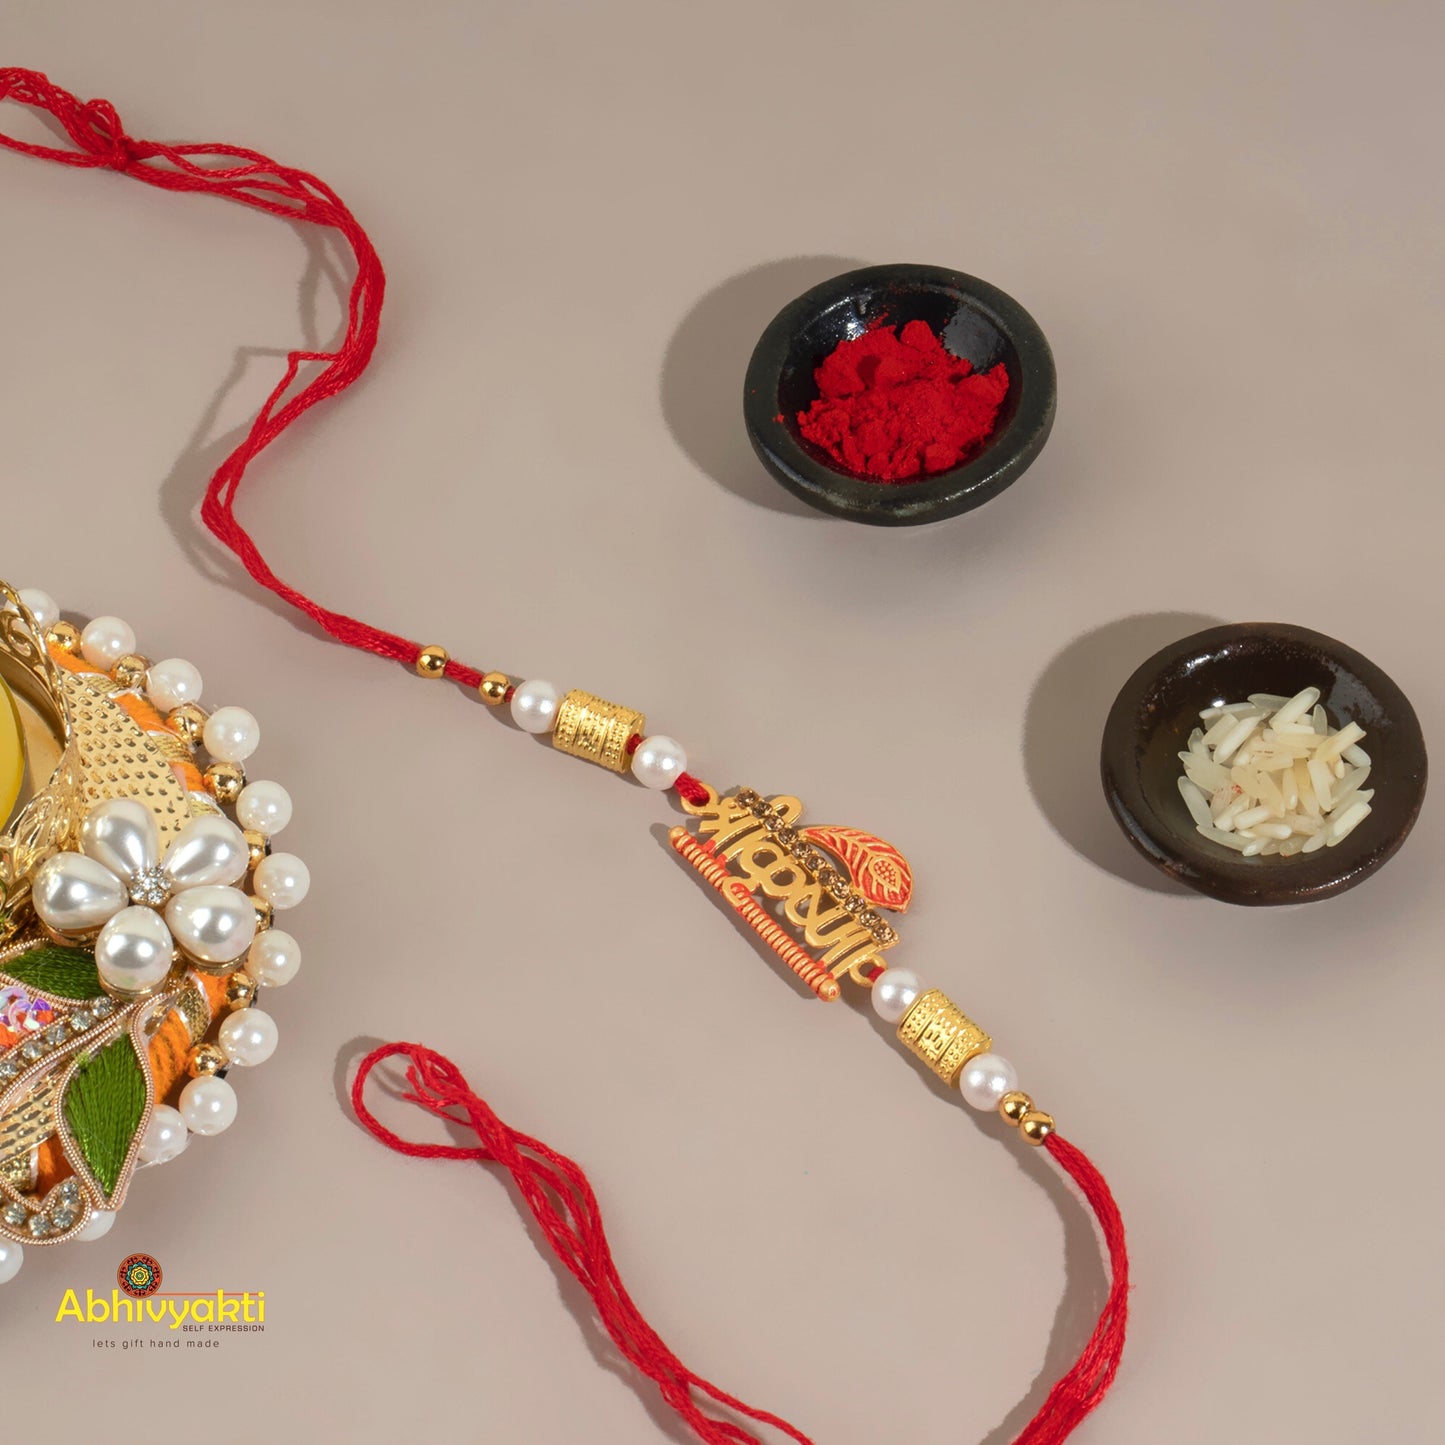 Shri Krishna design rakhi with a bowl of rice, symbolizing divine love and blessings.